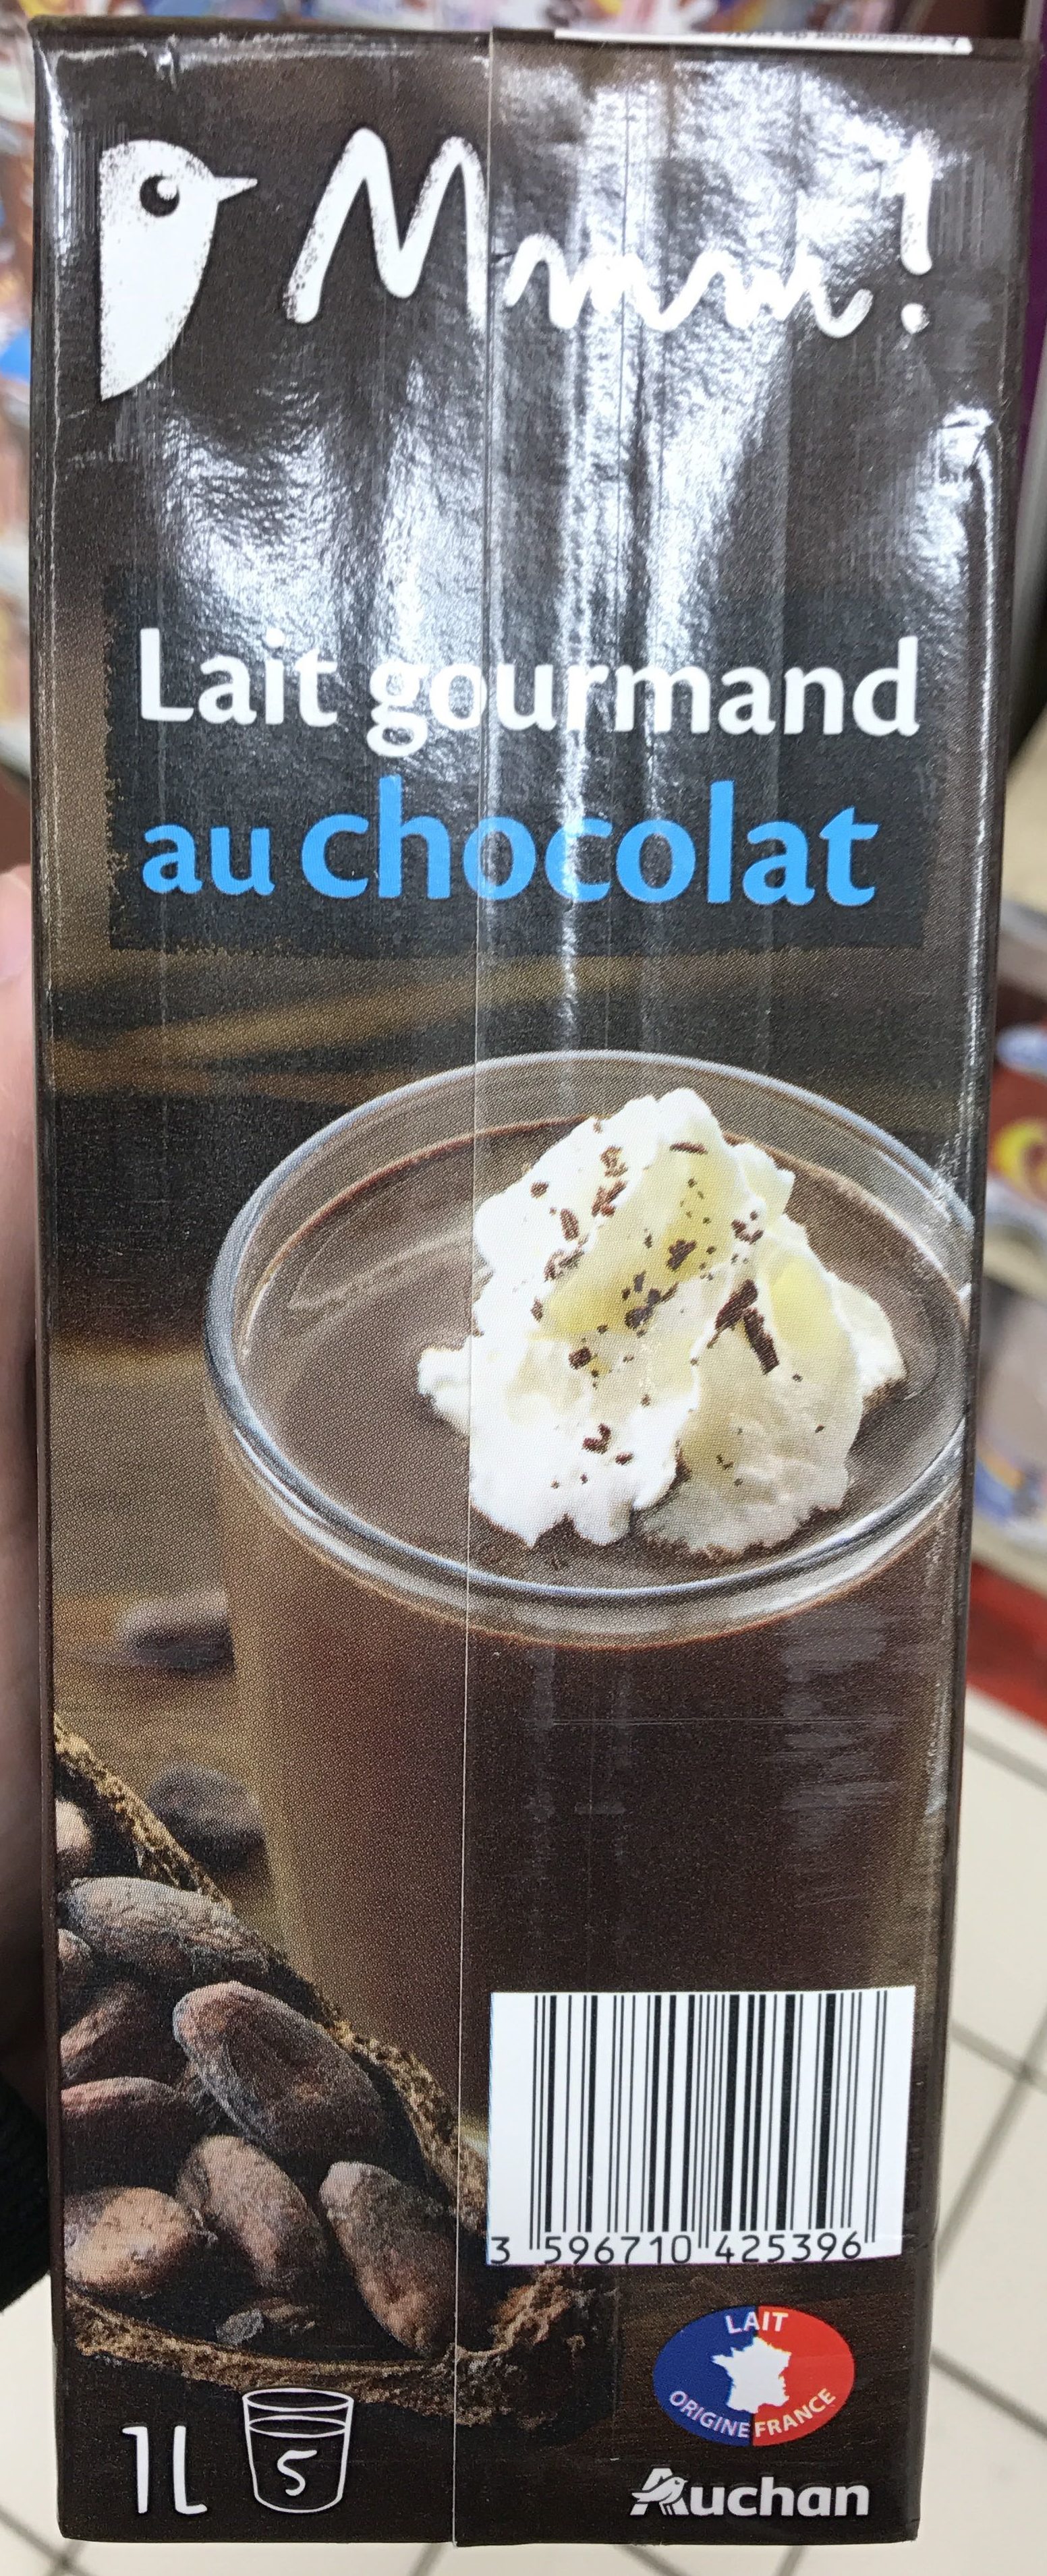 Lait gourmand au chocolat - Product - fr